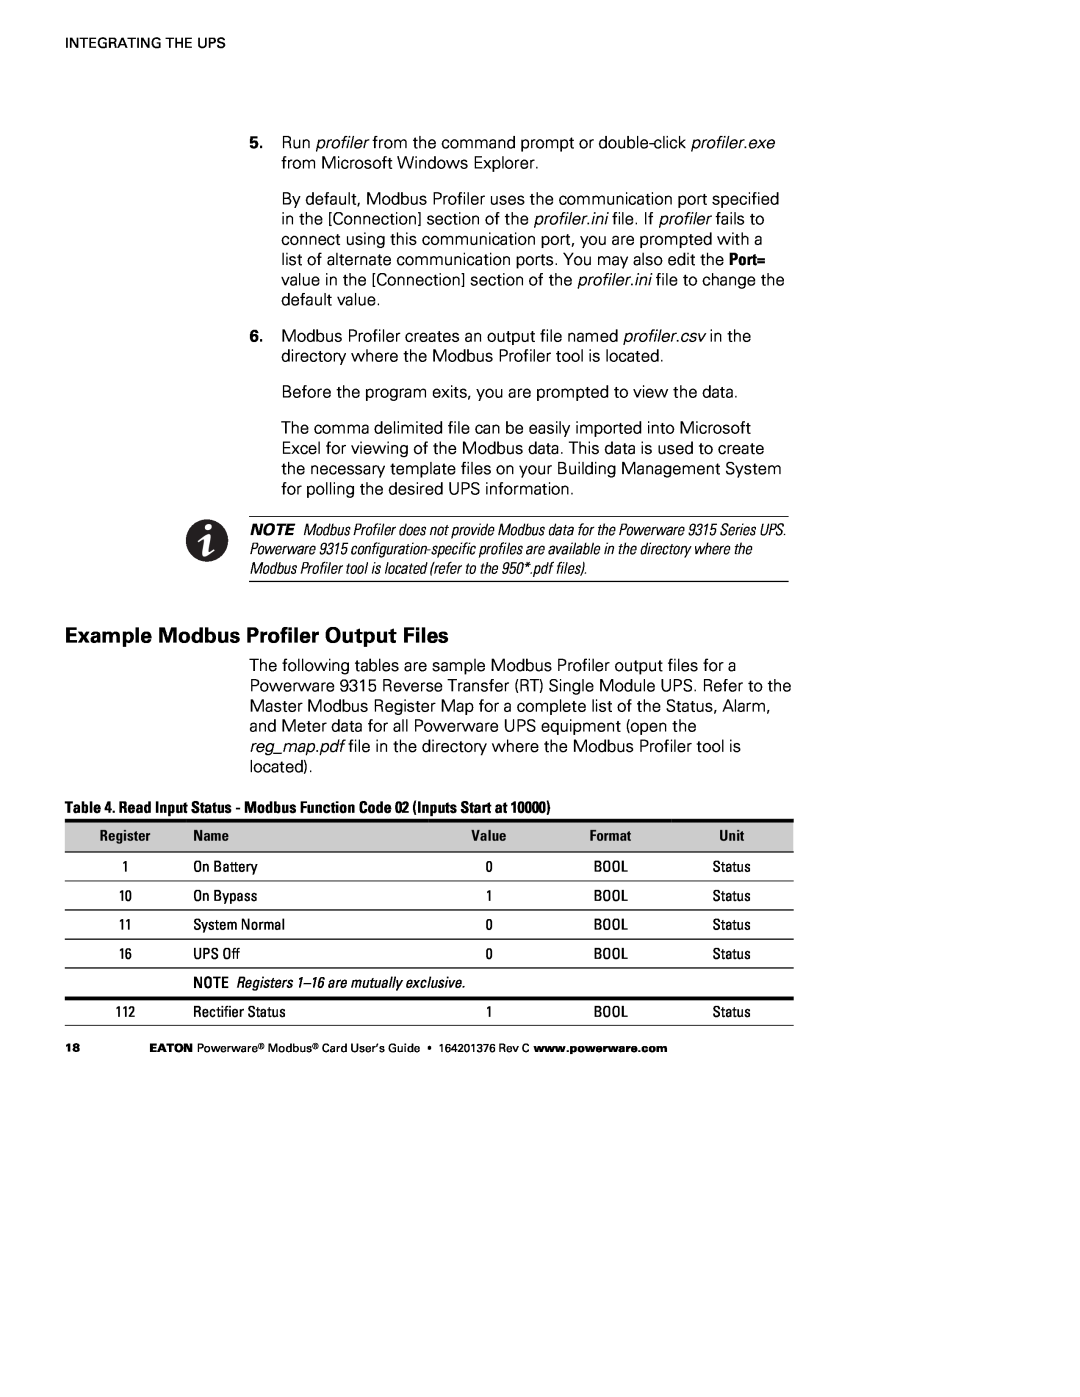 Powerware FCC 15 manual Example Modbus Profiler Output Files 